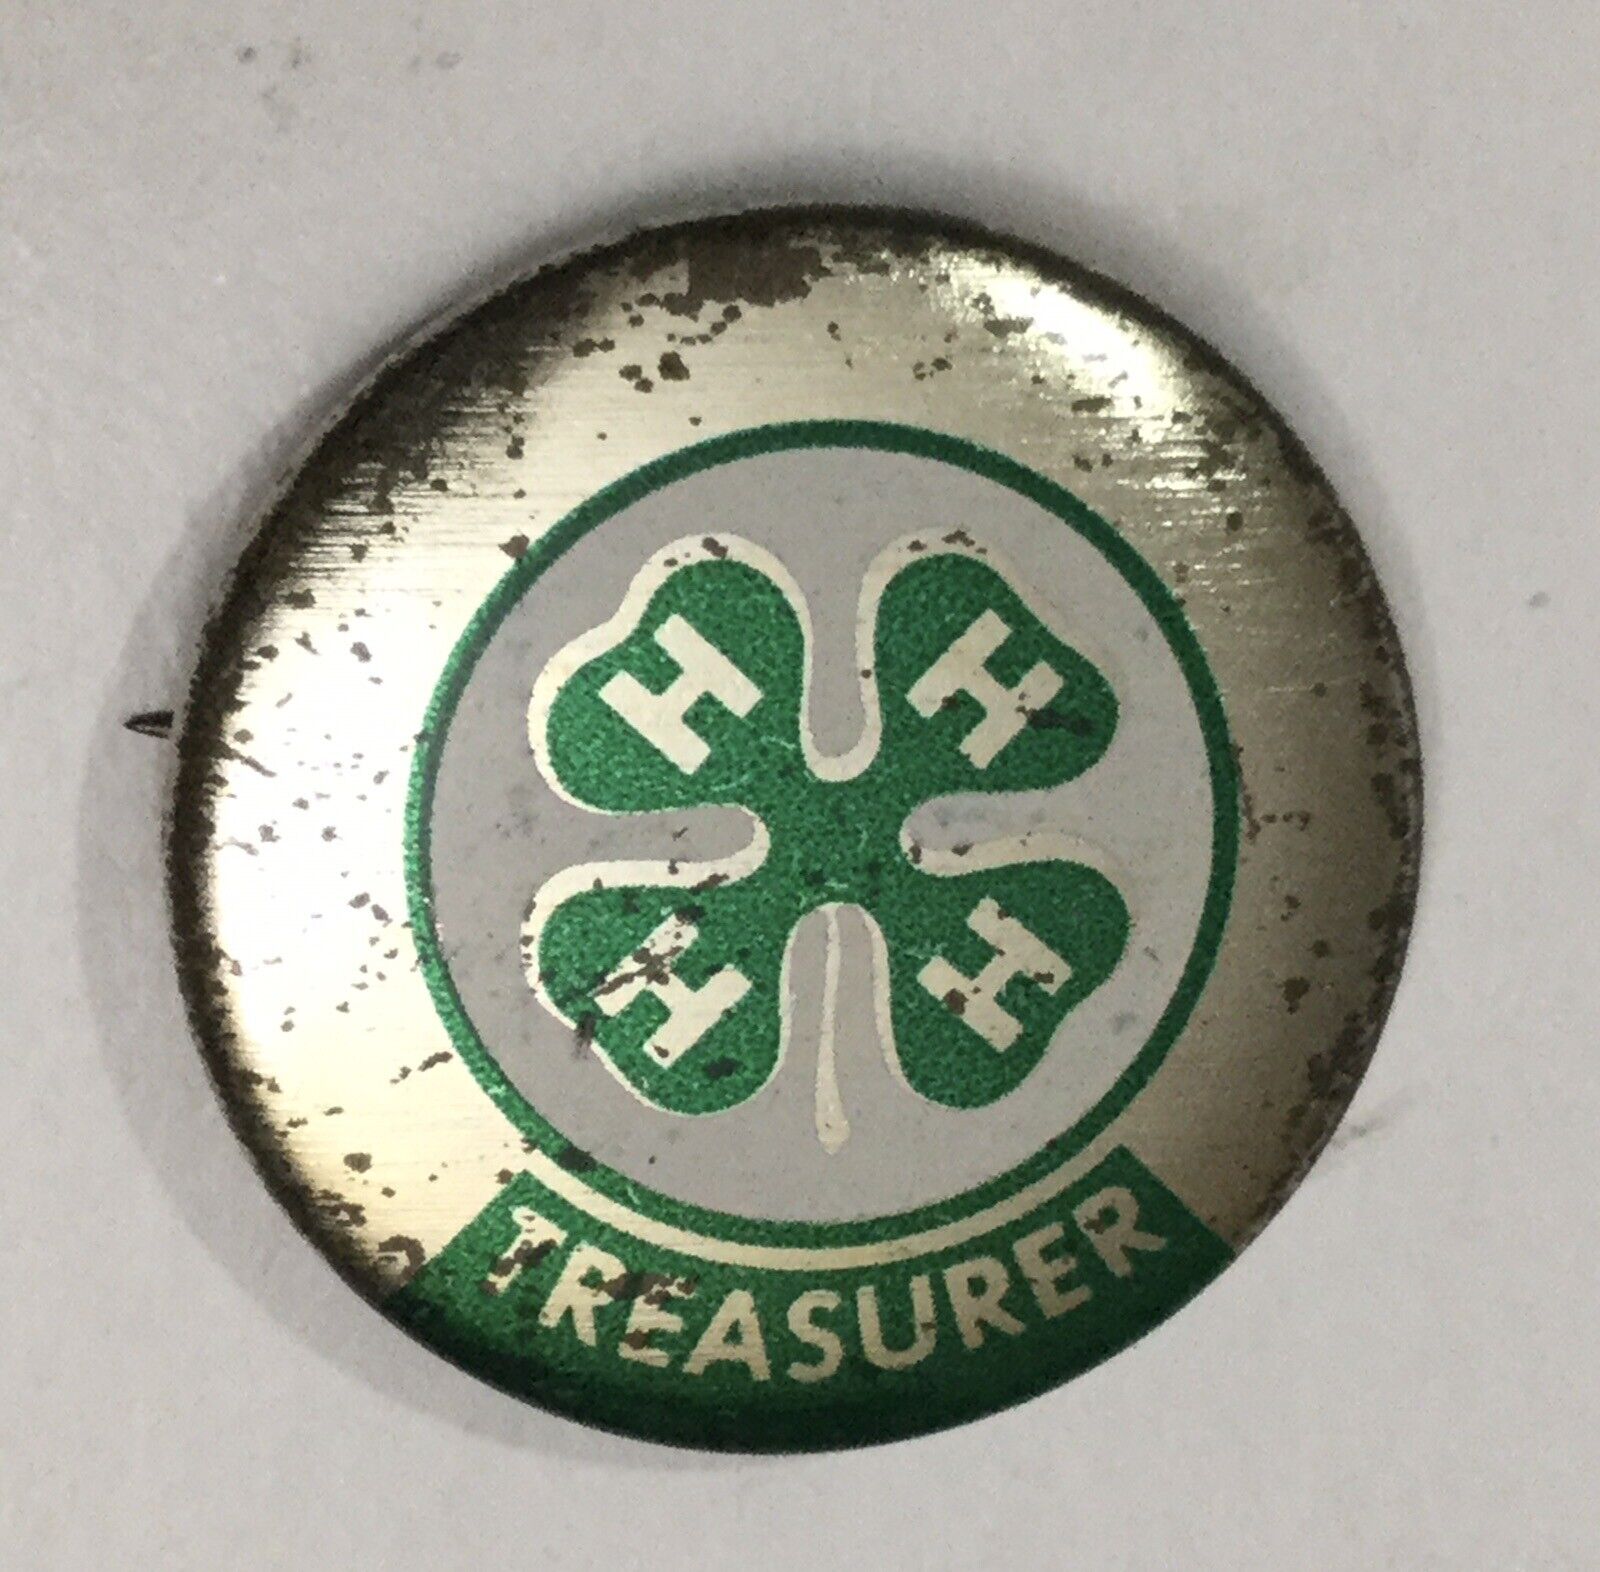 Vintage 4H Treasurer Pinback Button Gold,Green,White-Colored